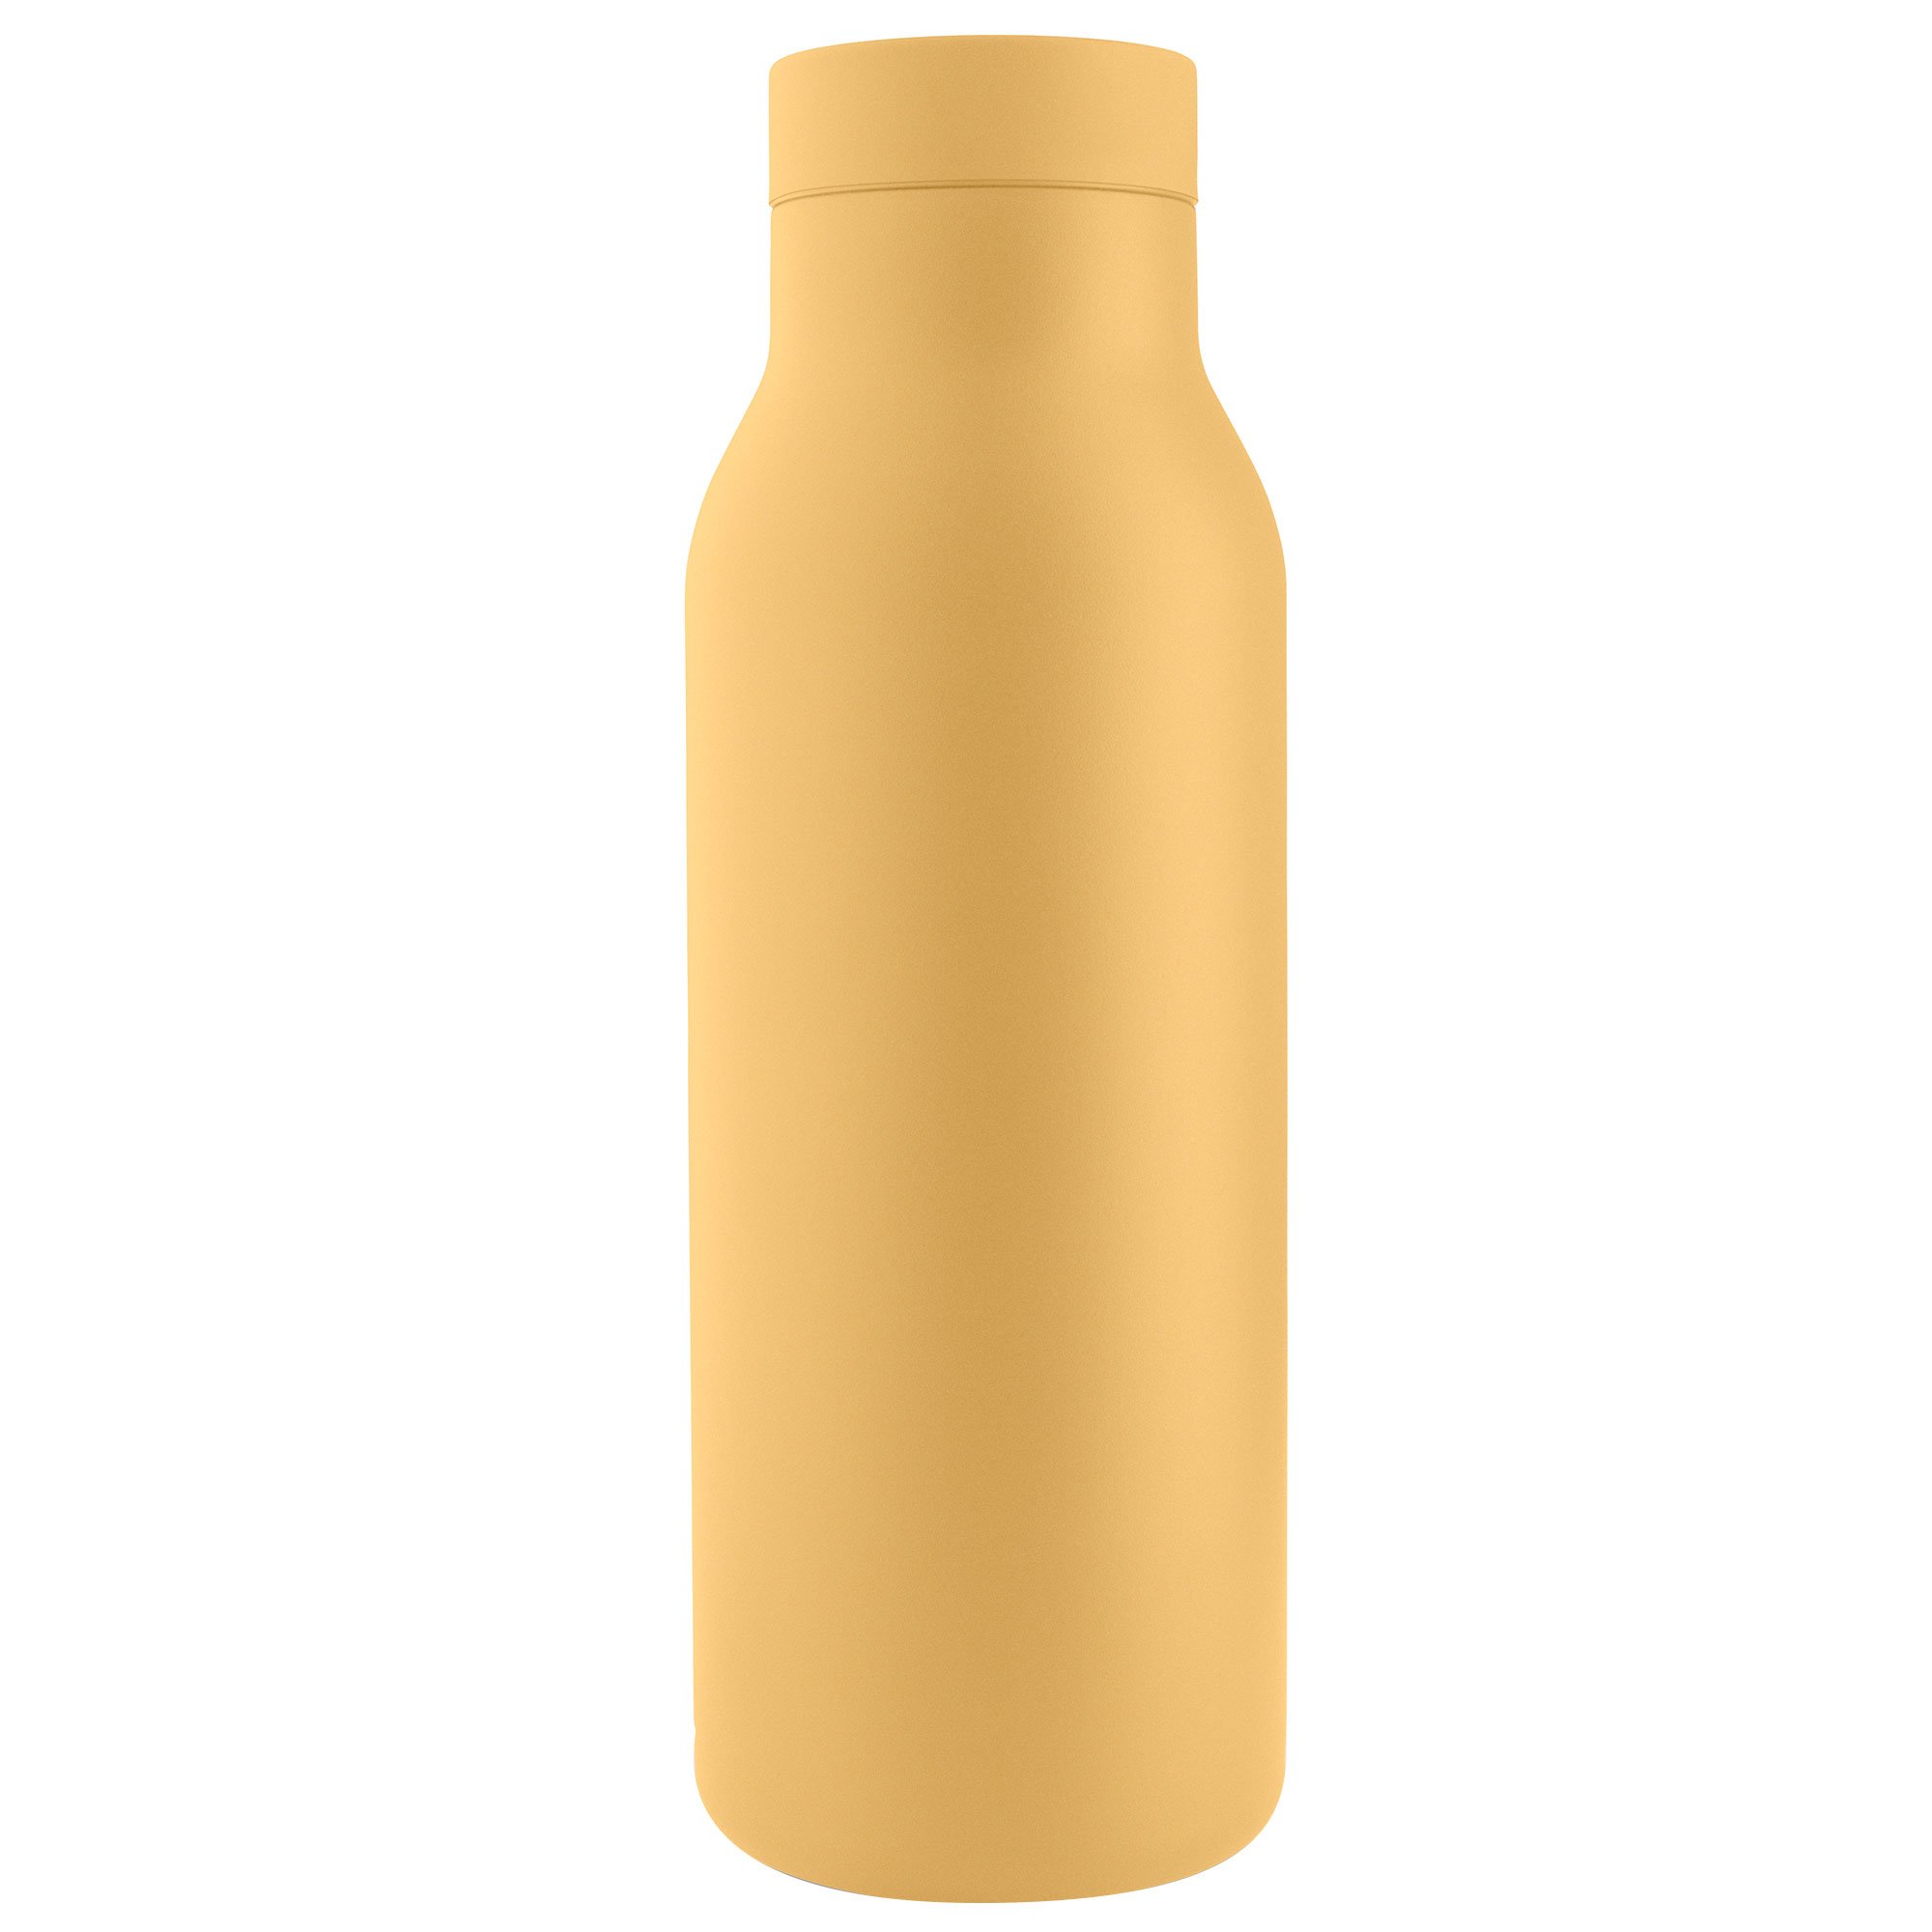 #3 - Eva Solo Urban termoflaske 0,5 liter, golden sand